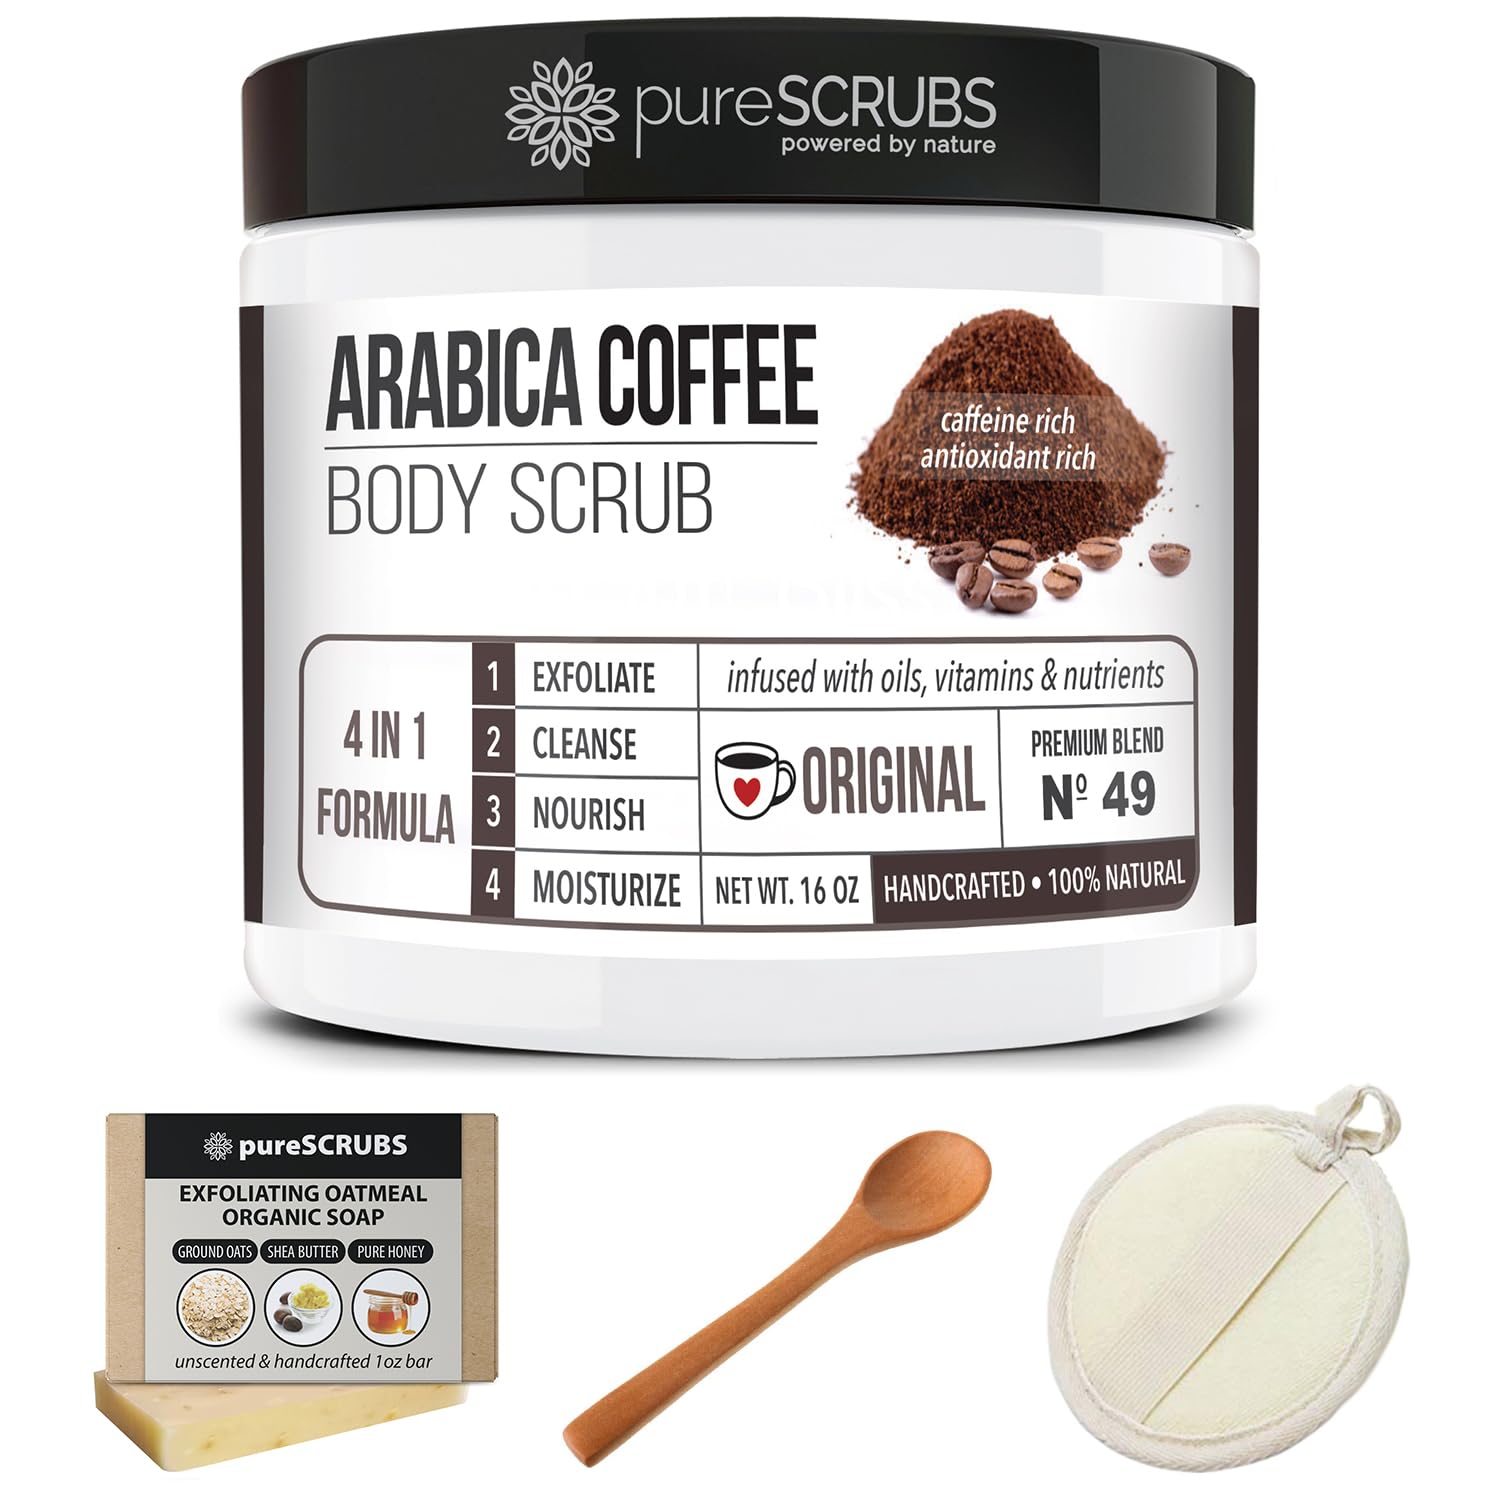 pureSCRUBS Premium Organic Arabica Coffee Body Scrub Set - ORIGINAL BLEND Large 16 Anti Cellulite Scrub With Essential Oils & Nutrients + FREE Wooden Spoon, Loofah & Mini Organic Exfoliating Bar Soap